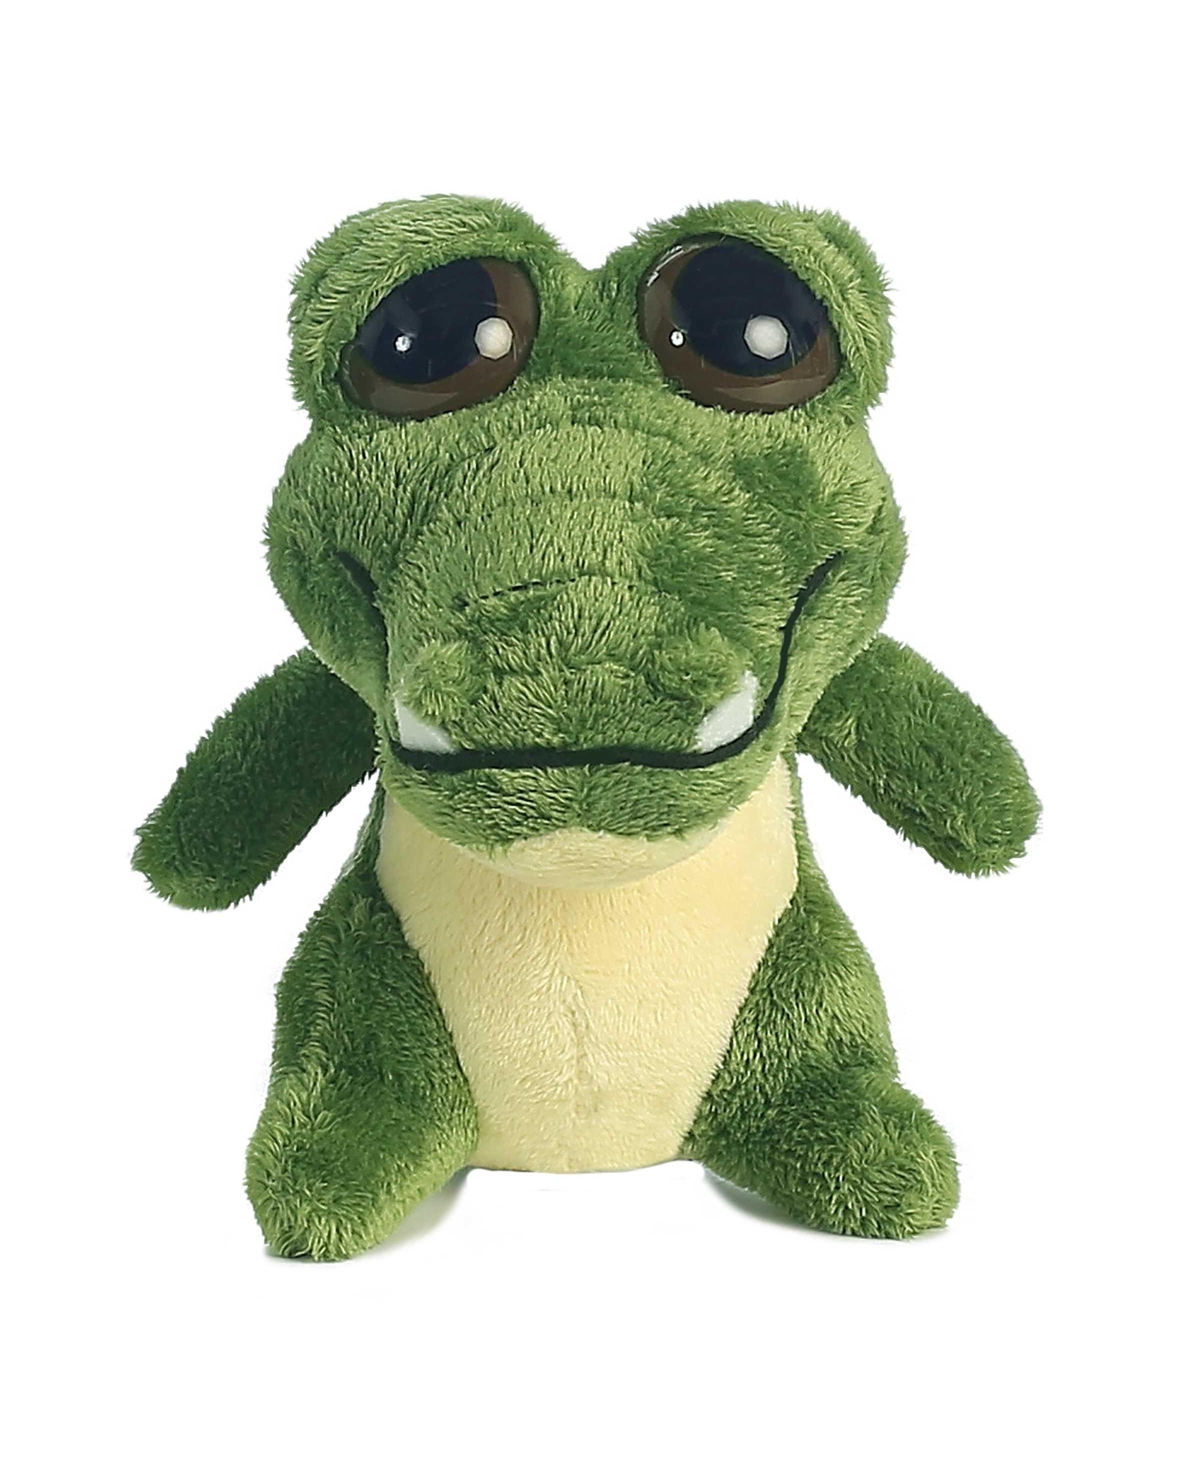 Aurora Kids' Mini Green Gator Dreamy Eyes Enchanting Plush Toy Green 5"